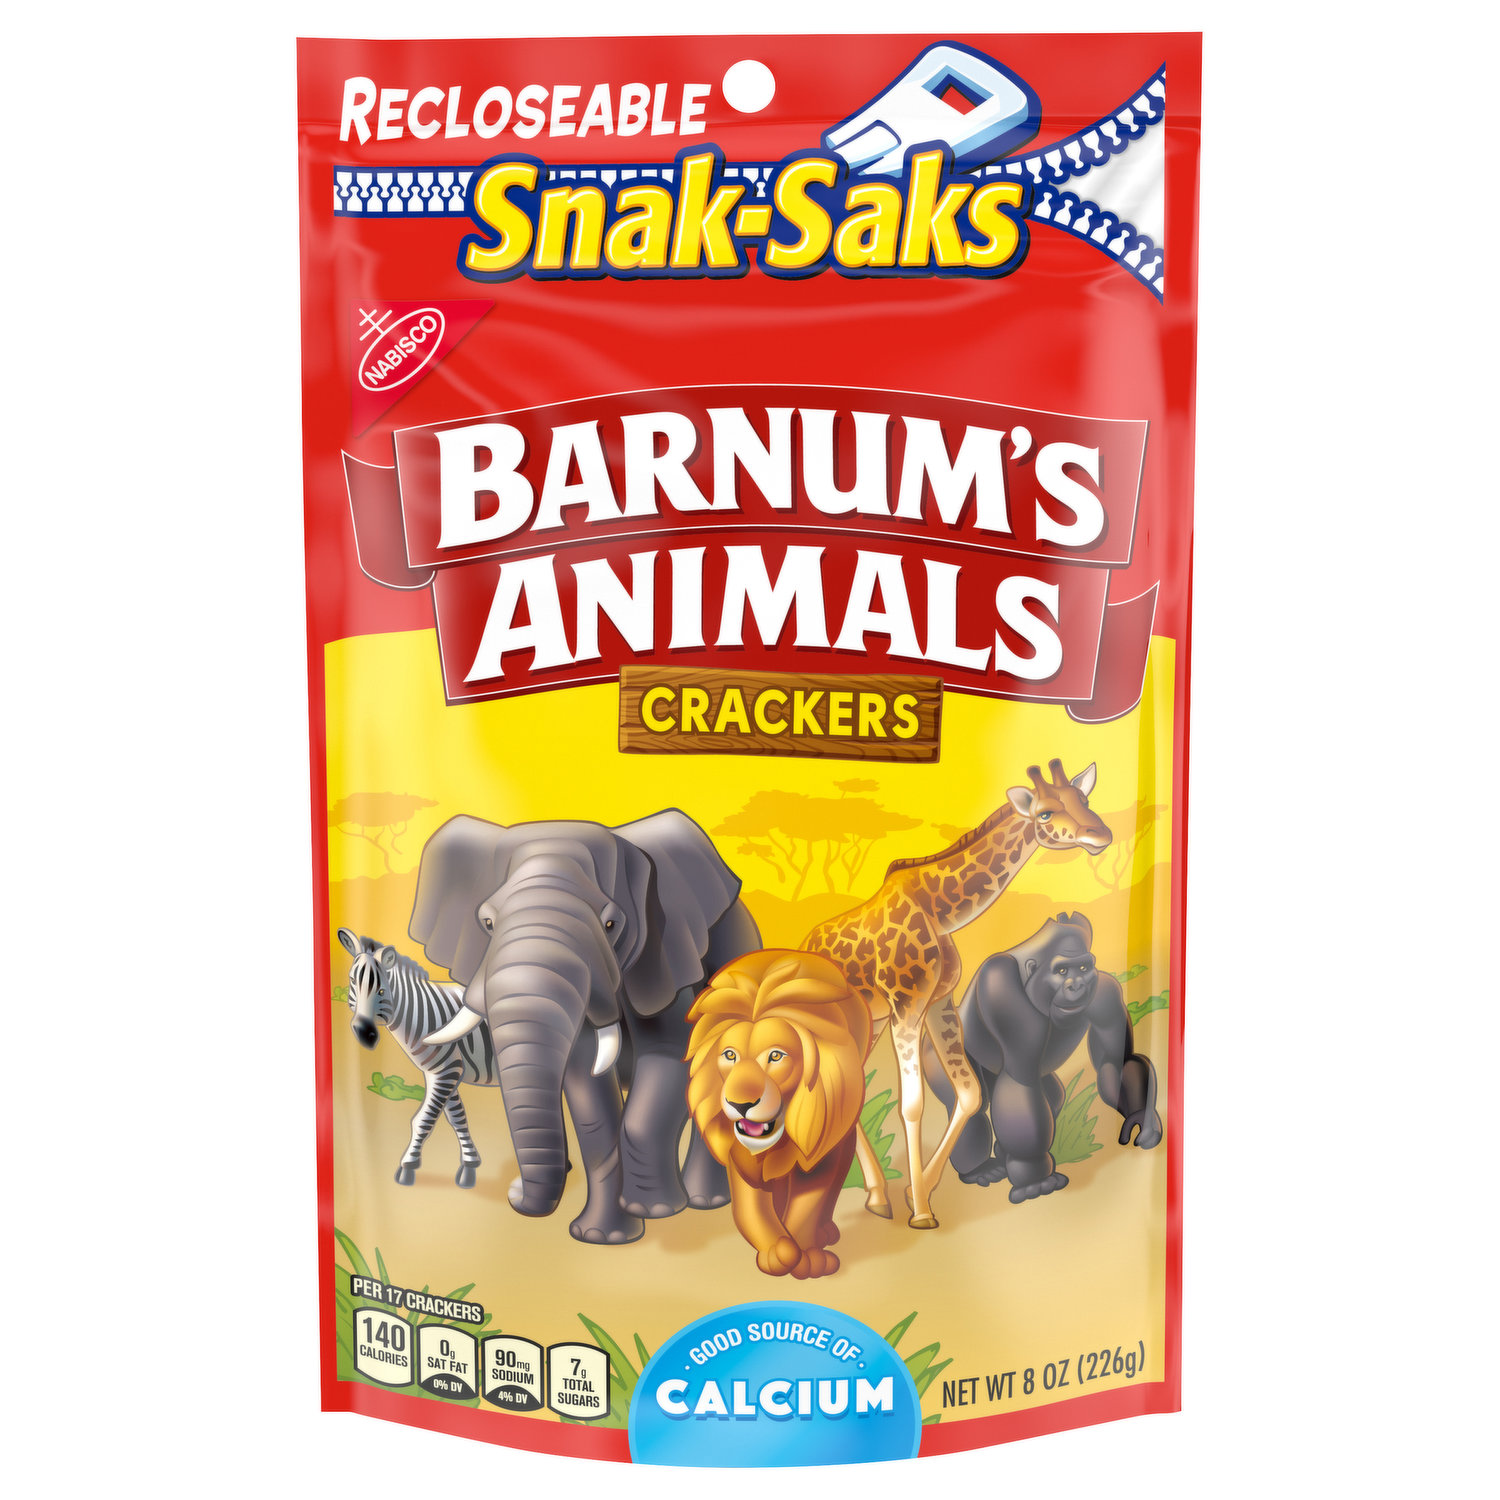 Barnum's Animals Crackers, Snak-Saks